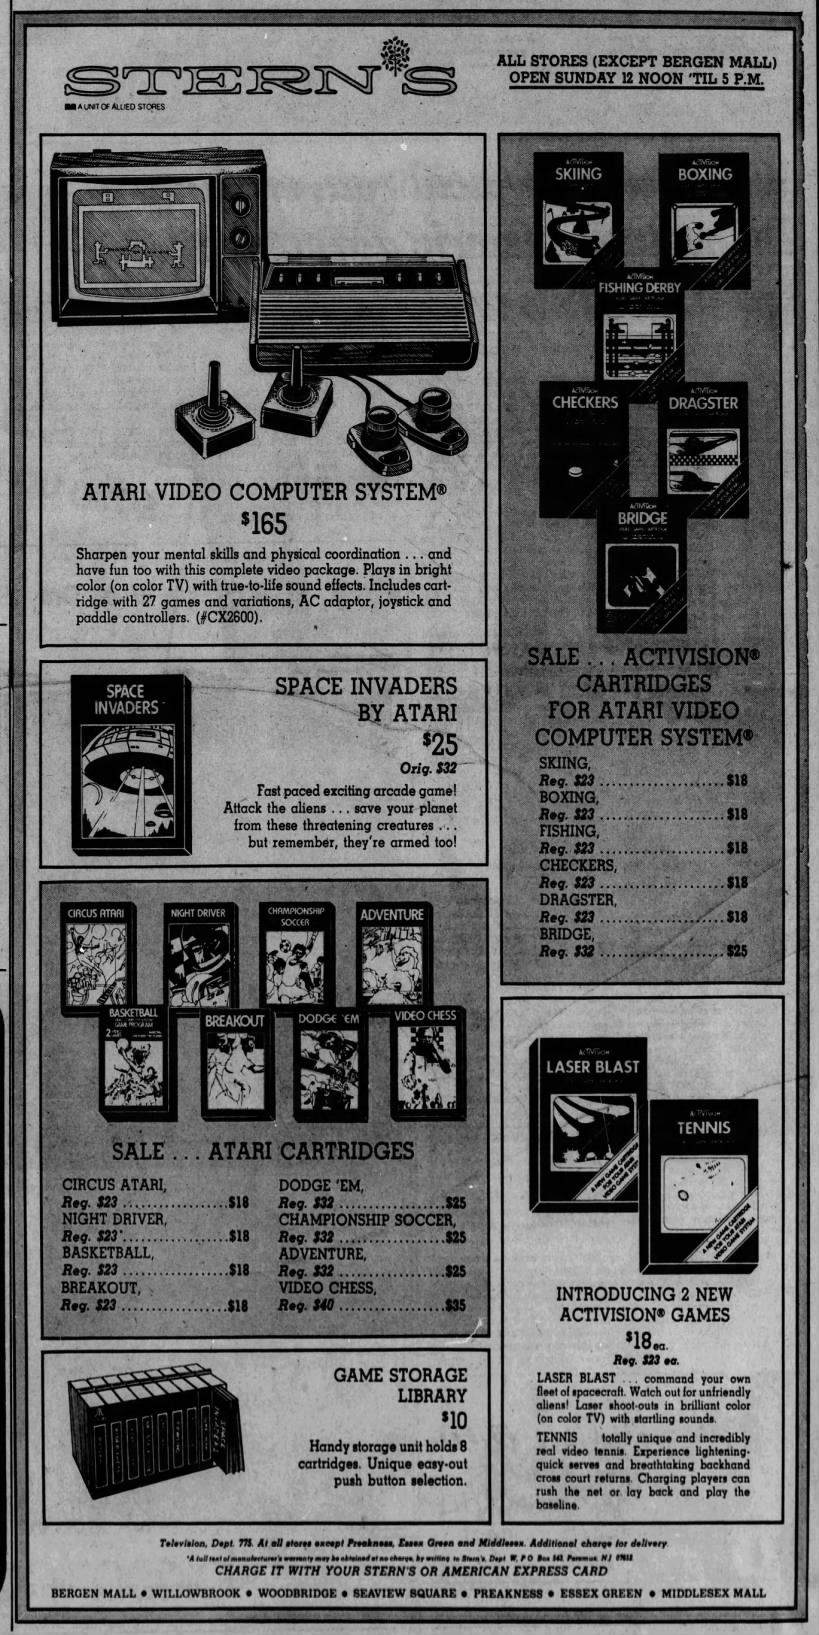 Atari 2600: STERN'S (Mar 22, 81)